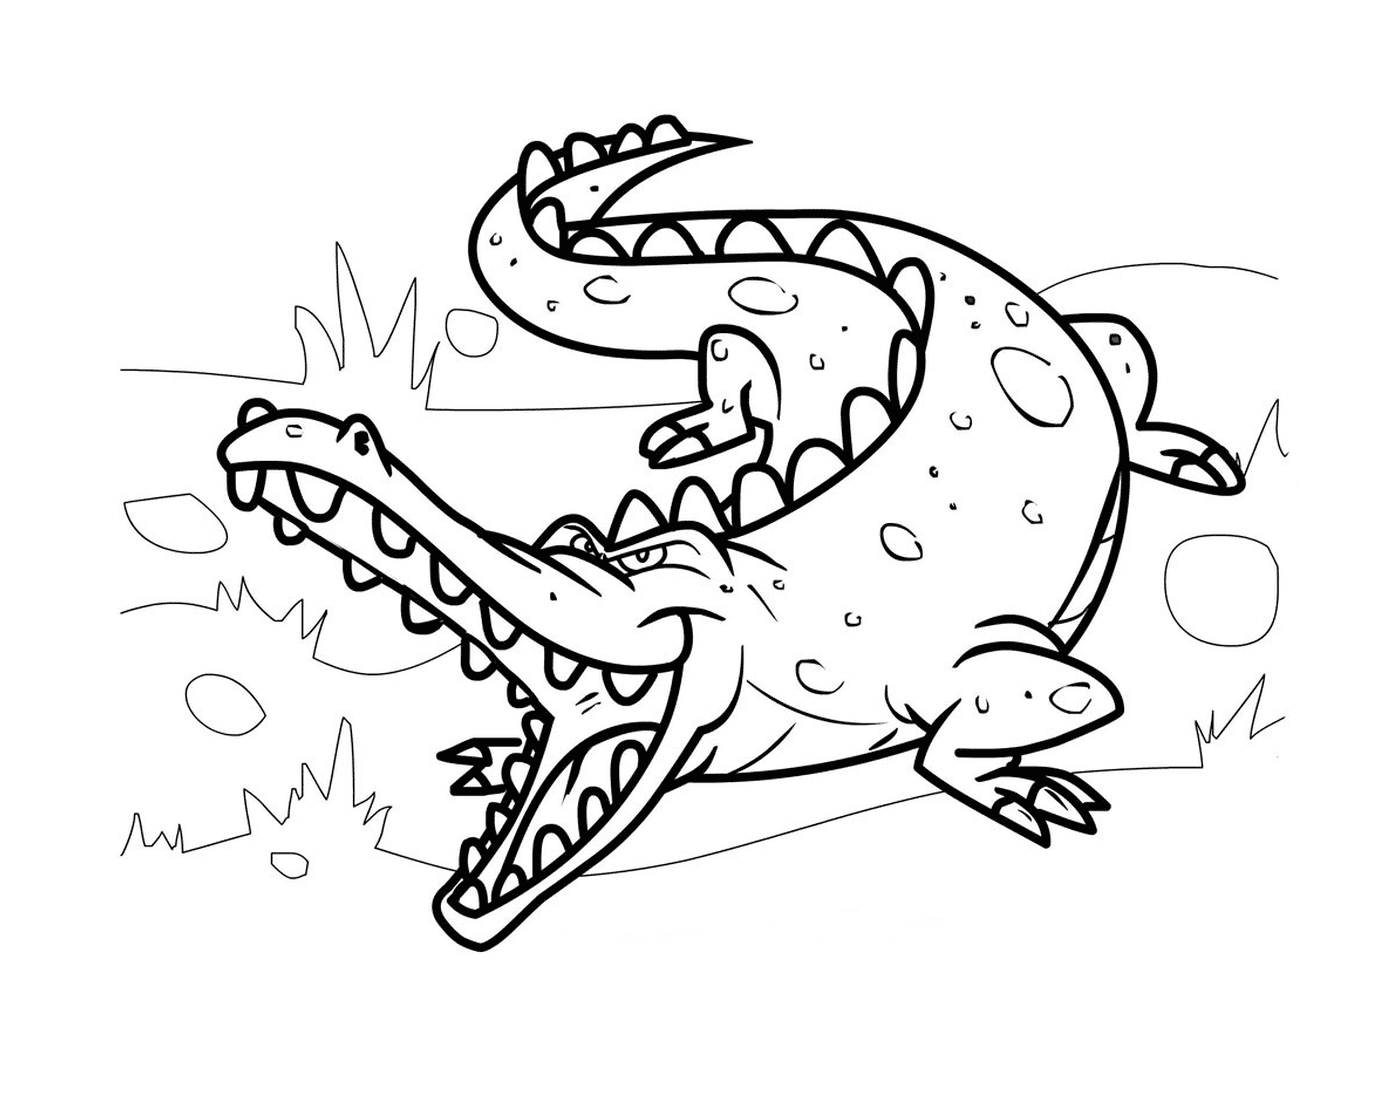   Un crocodile méchant dans son habitat naturel, en style cartoon 